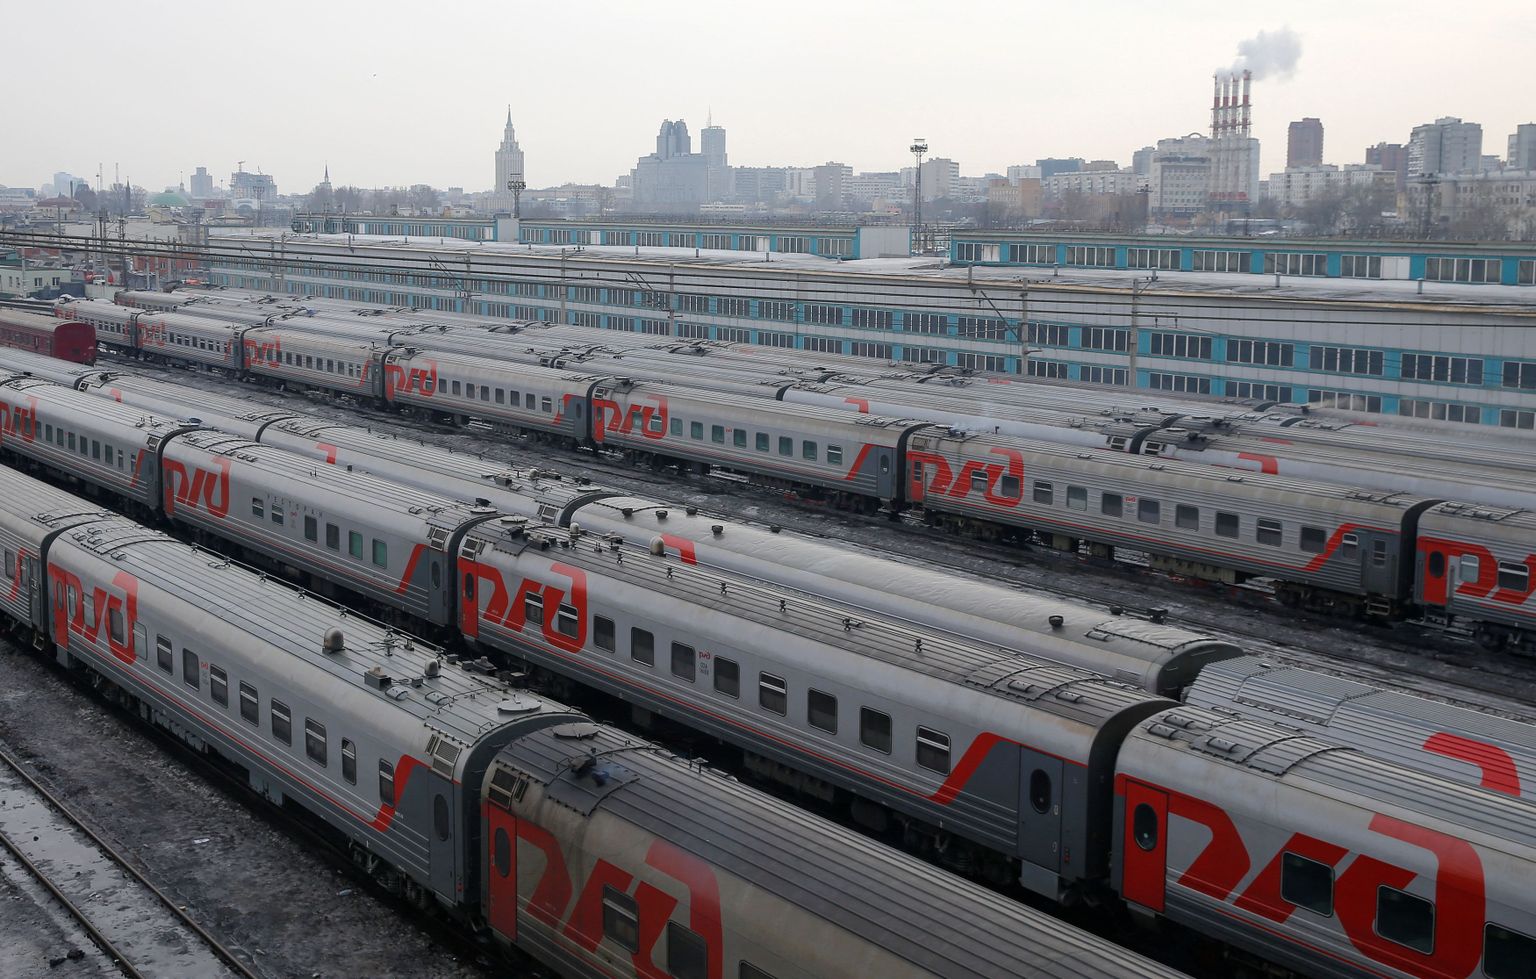 Venemaa riiklikule raudteefirma Venemaa Raudteed vagunid.